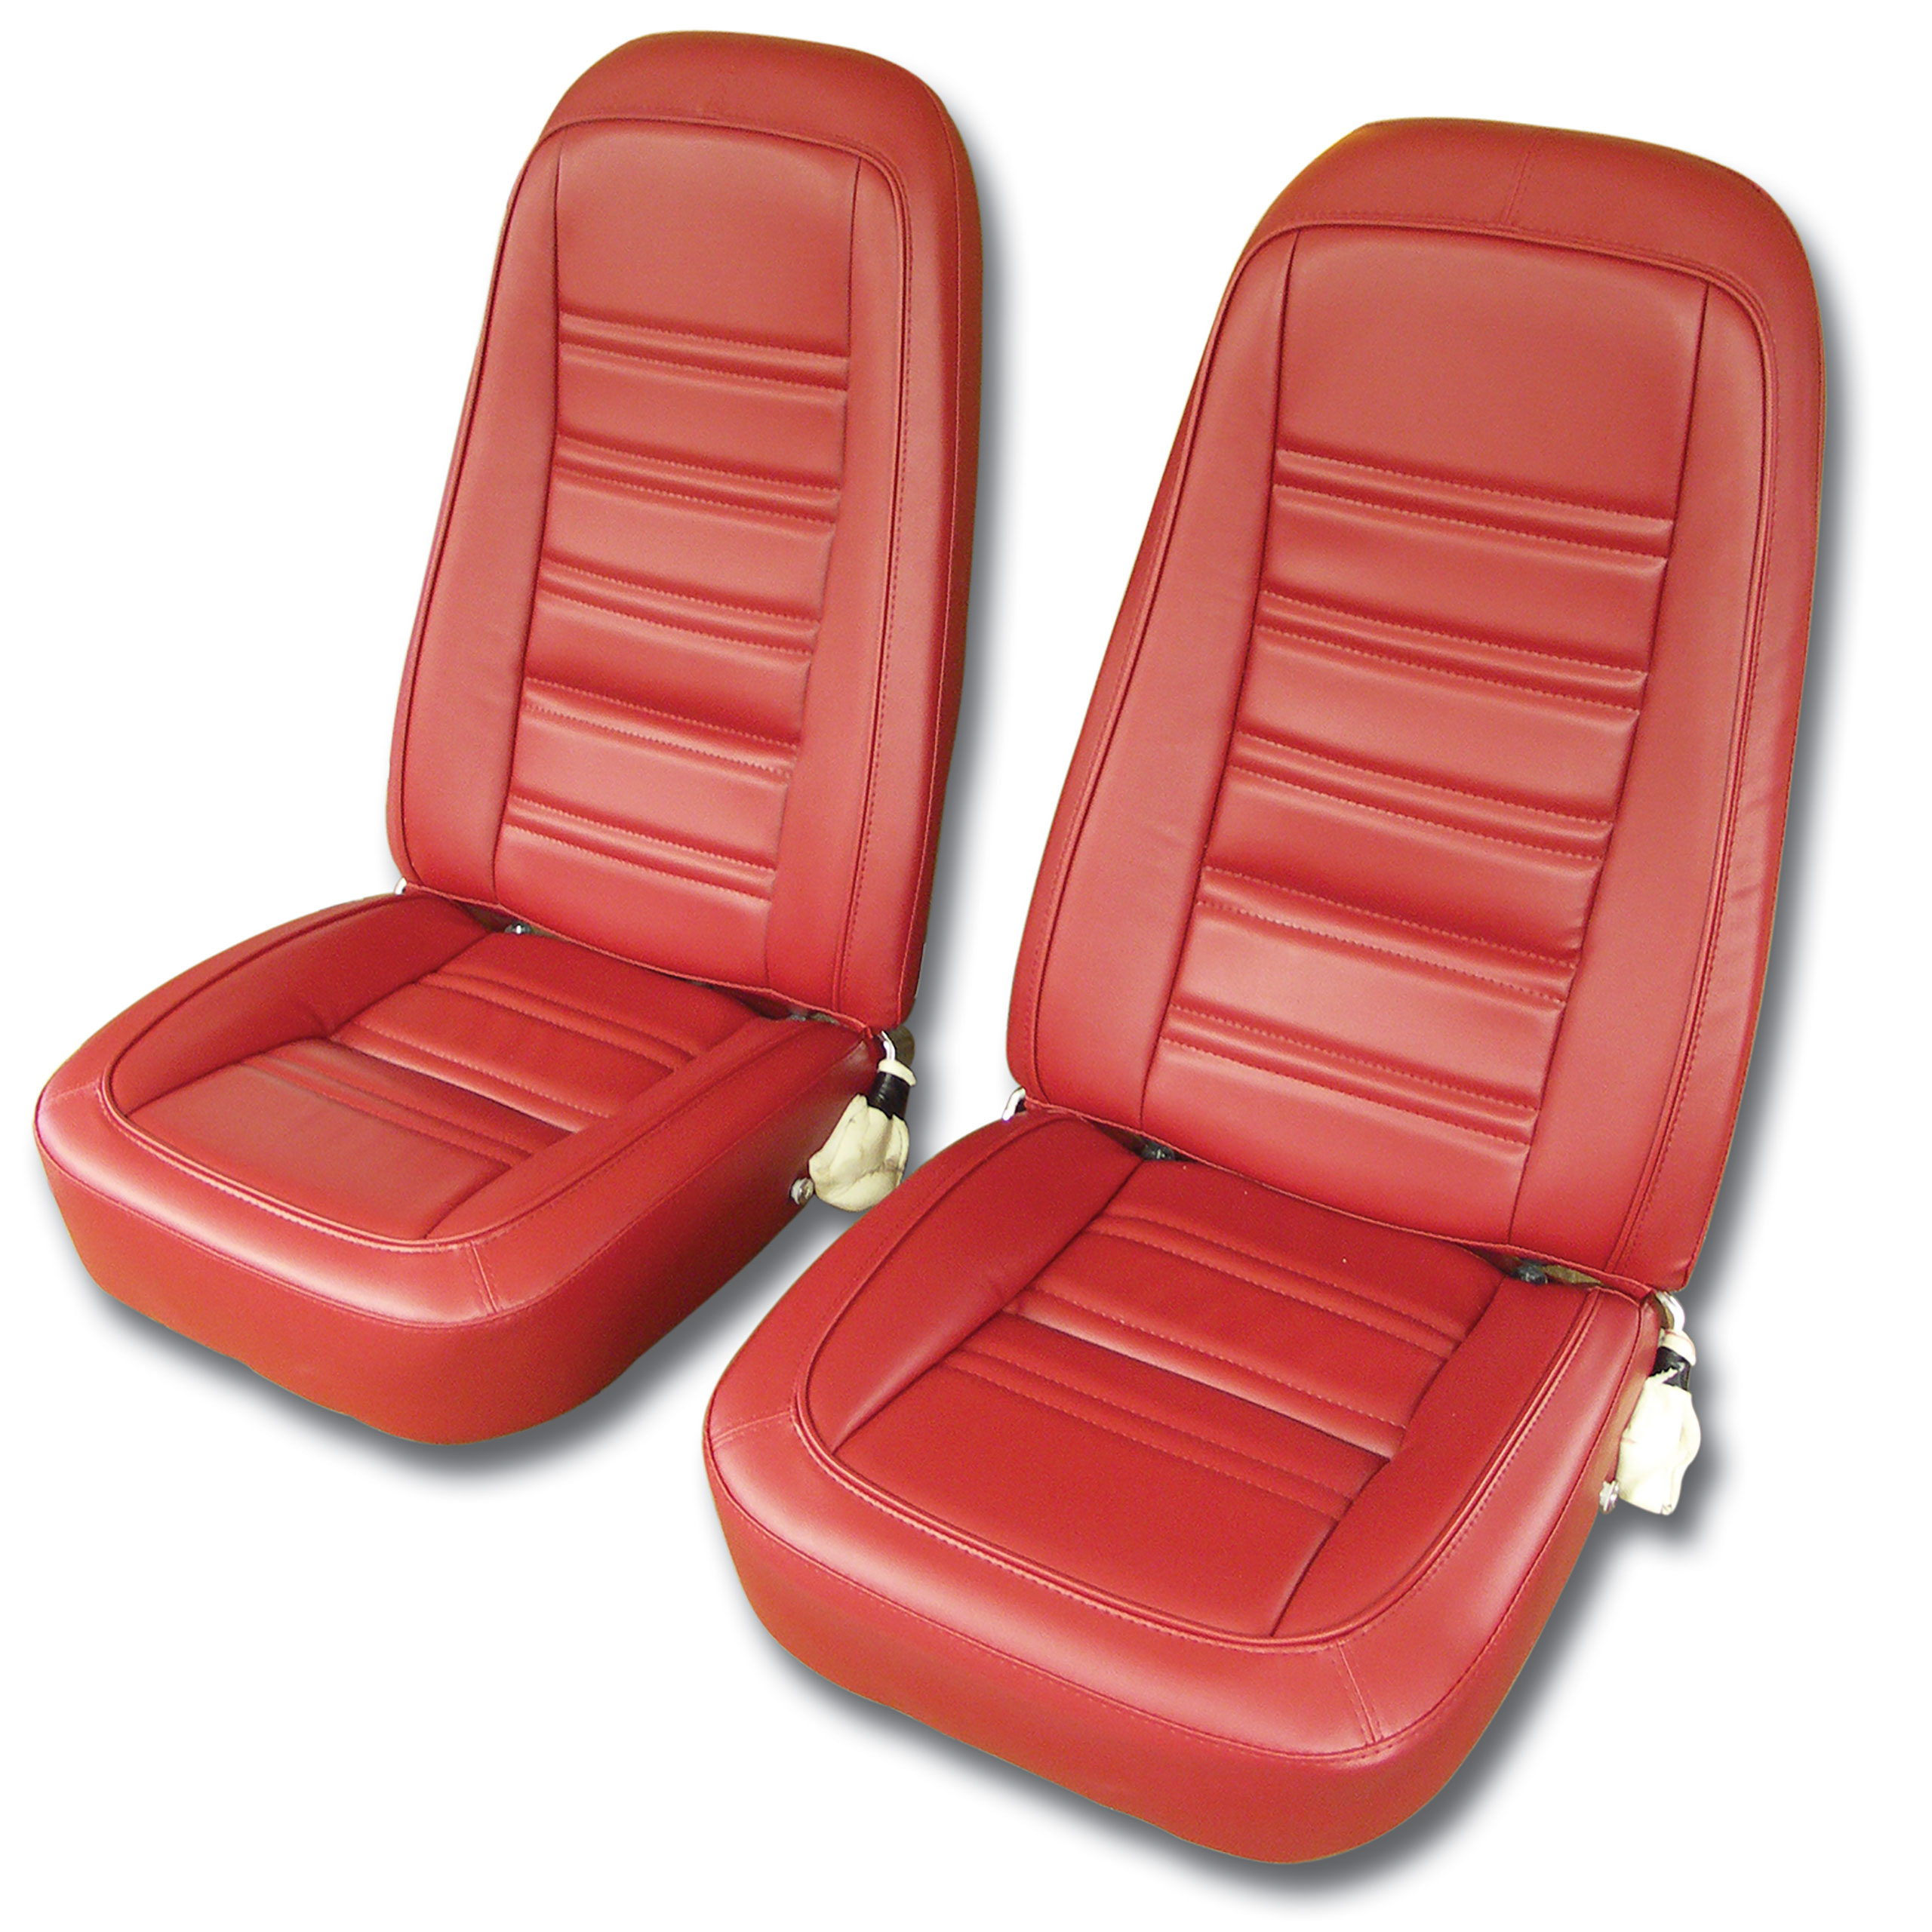 1977-1978 Corvette C3 "Leather-Like" Vinyl Seat Covers Red CA-421524 